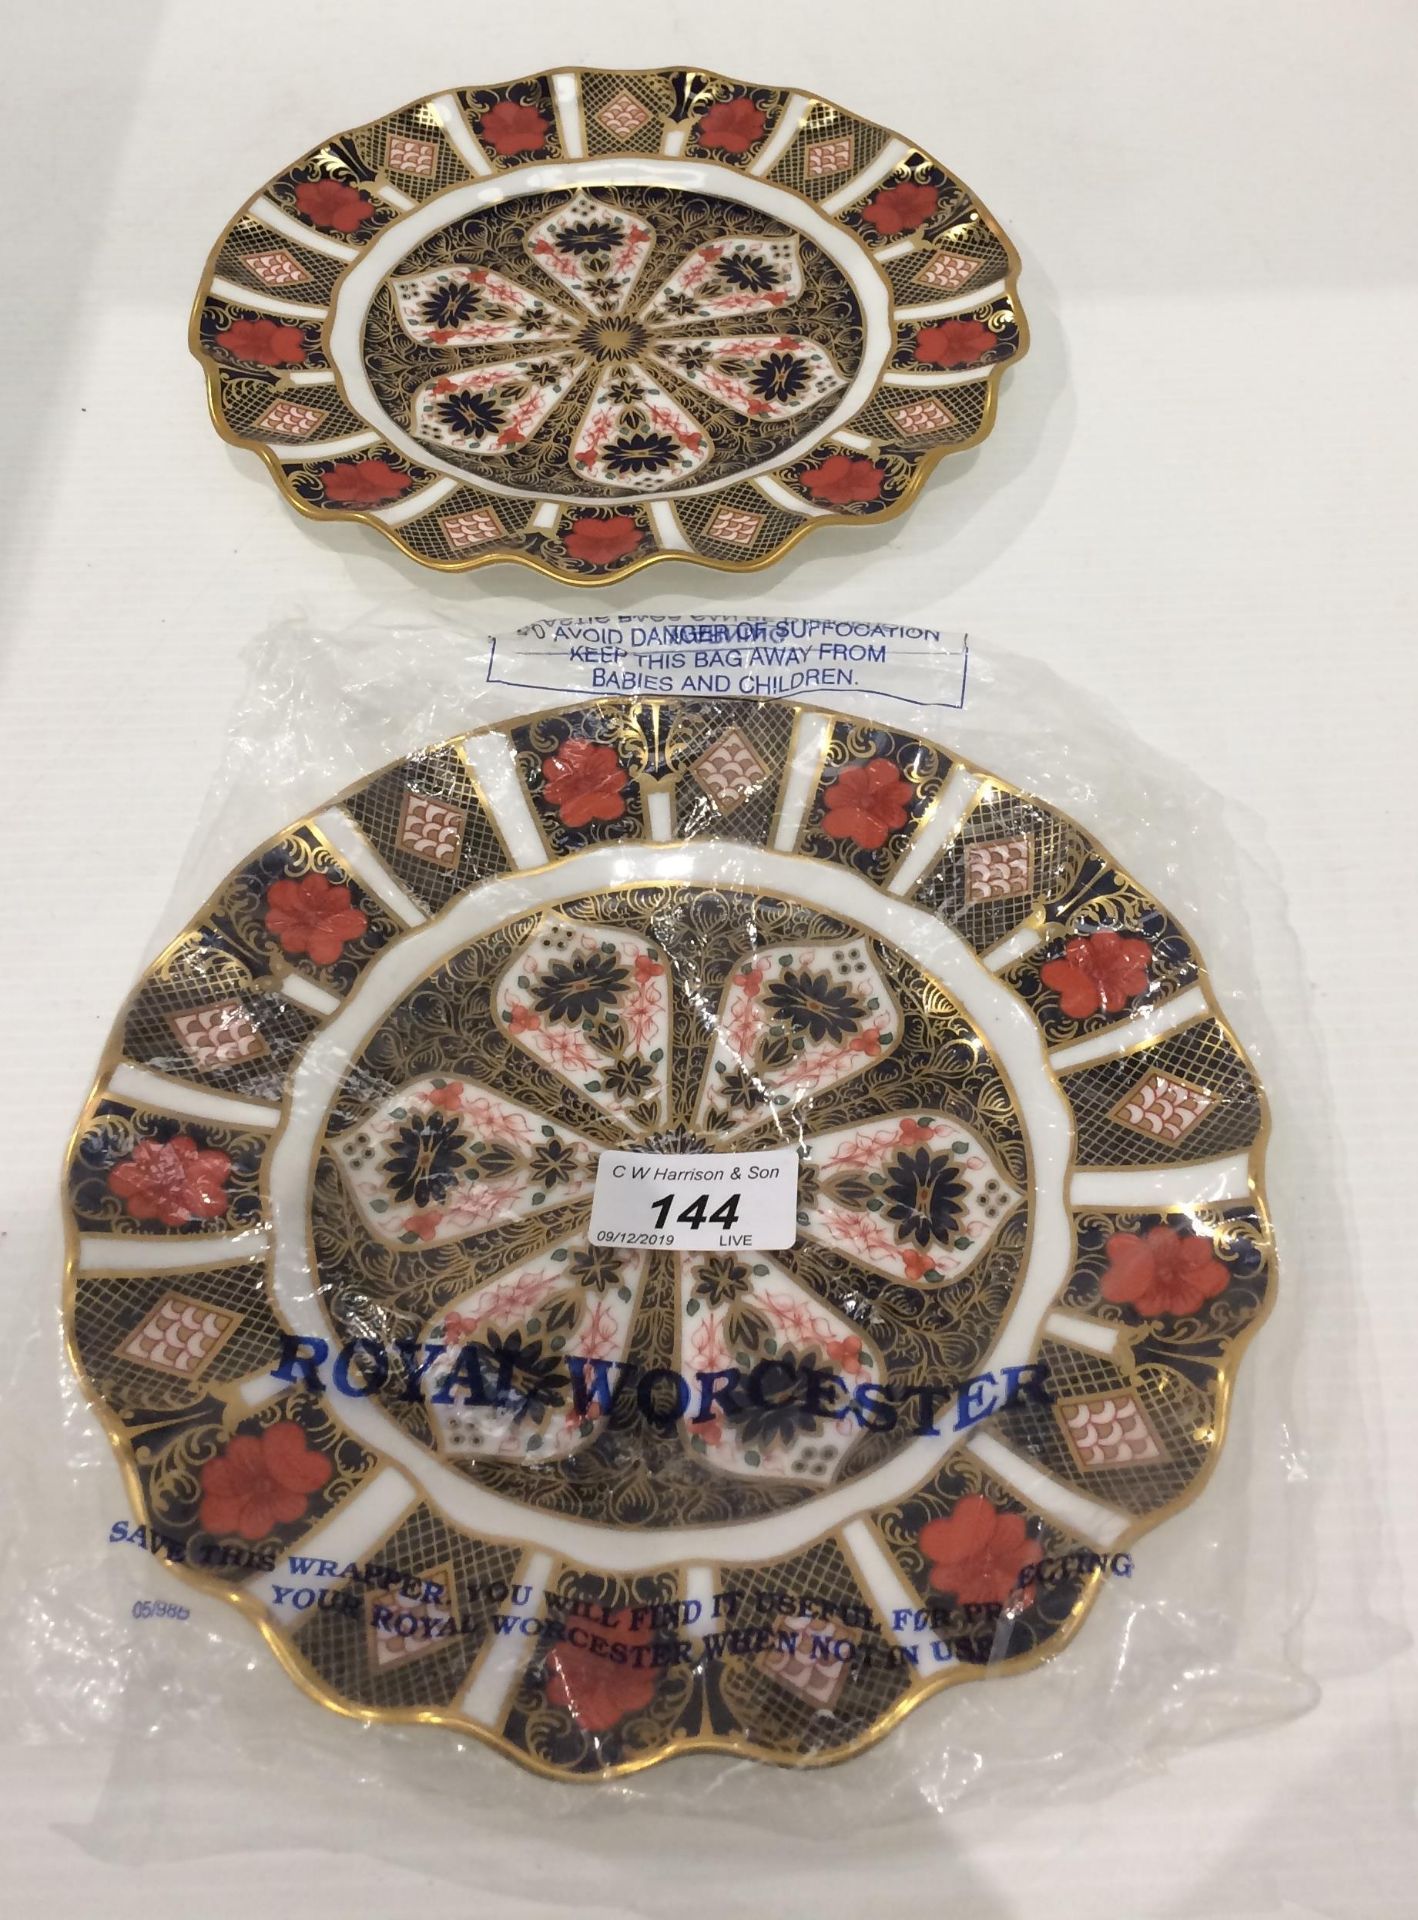 Two Royal Crown Derby Old Imari pattern plates each 22cm diameter